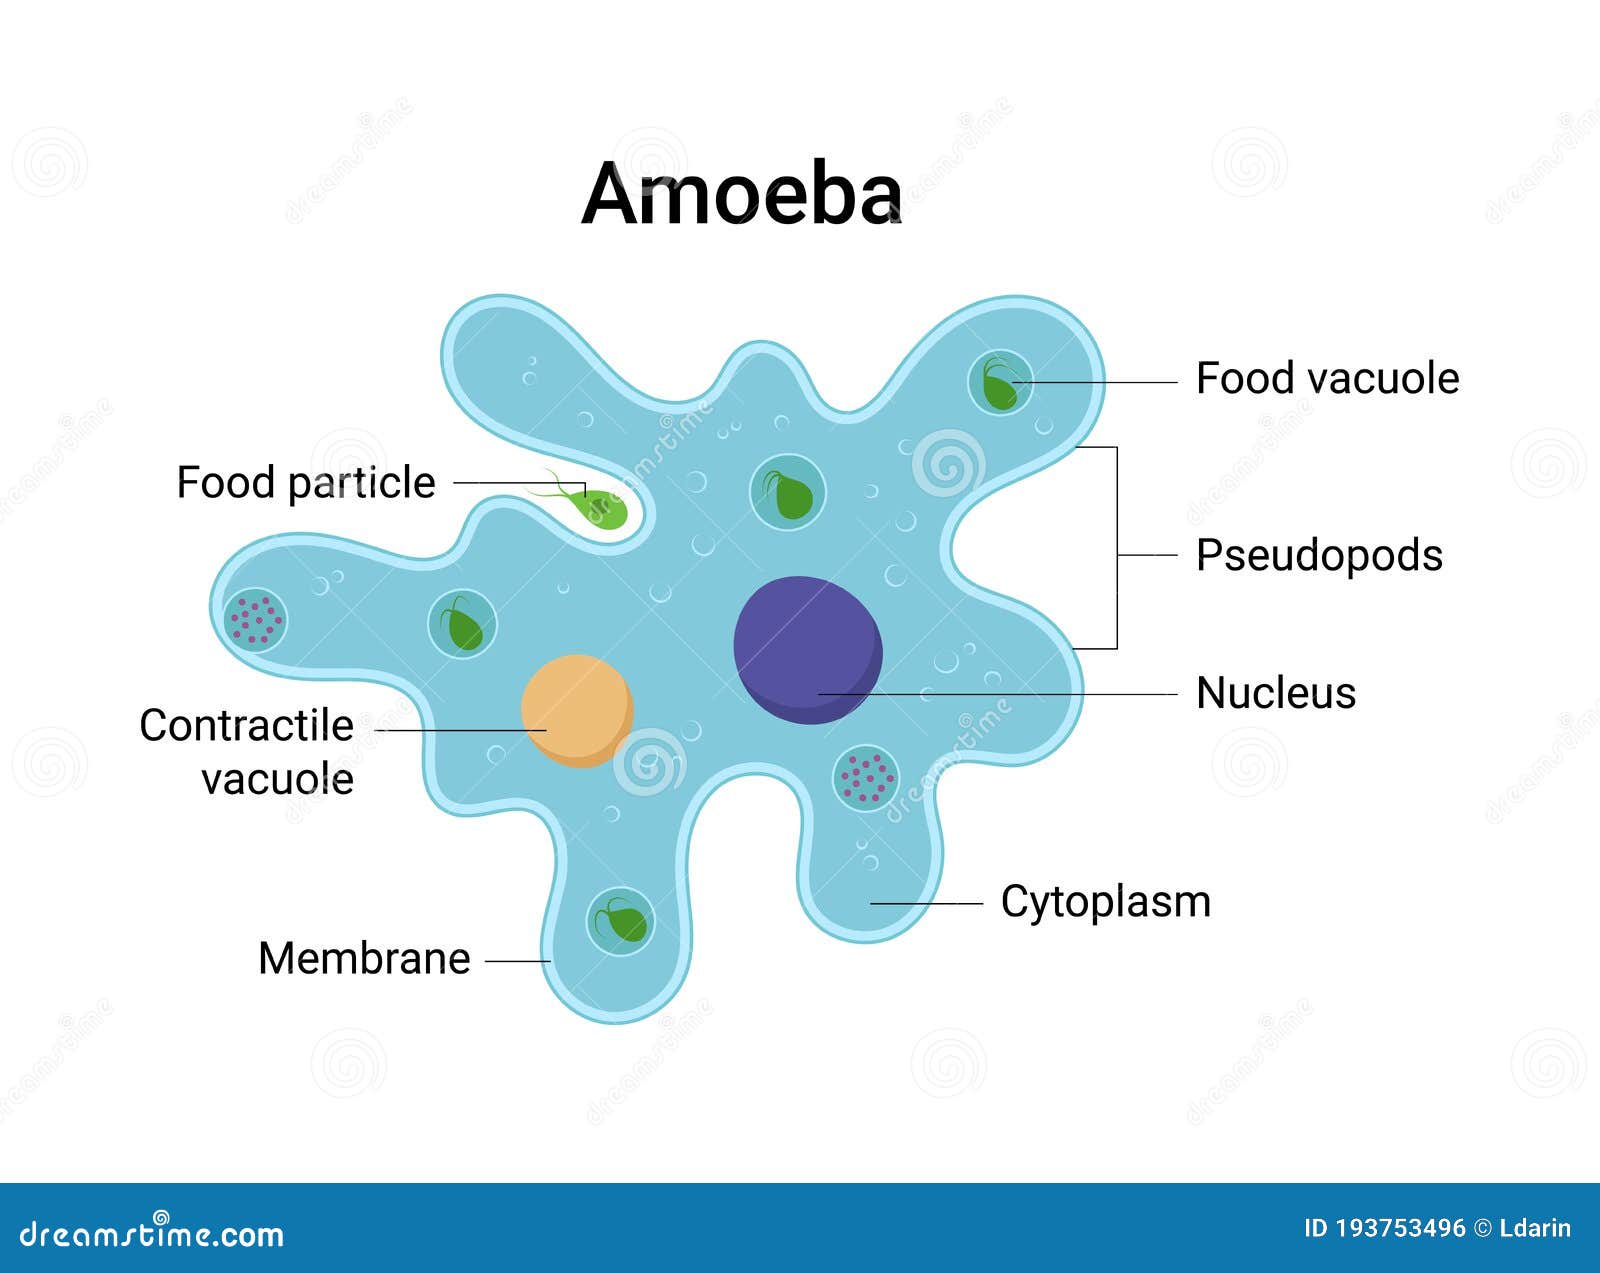 Structure Of An Amoeba Proteus Cartoon Vector | CartoonDealer.com #34406447